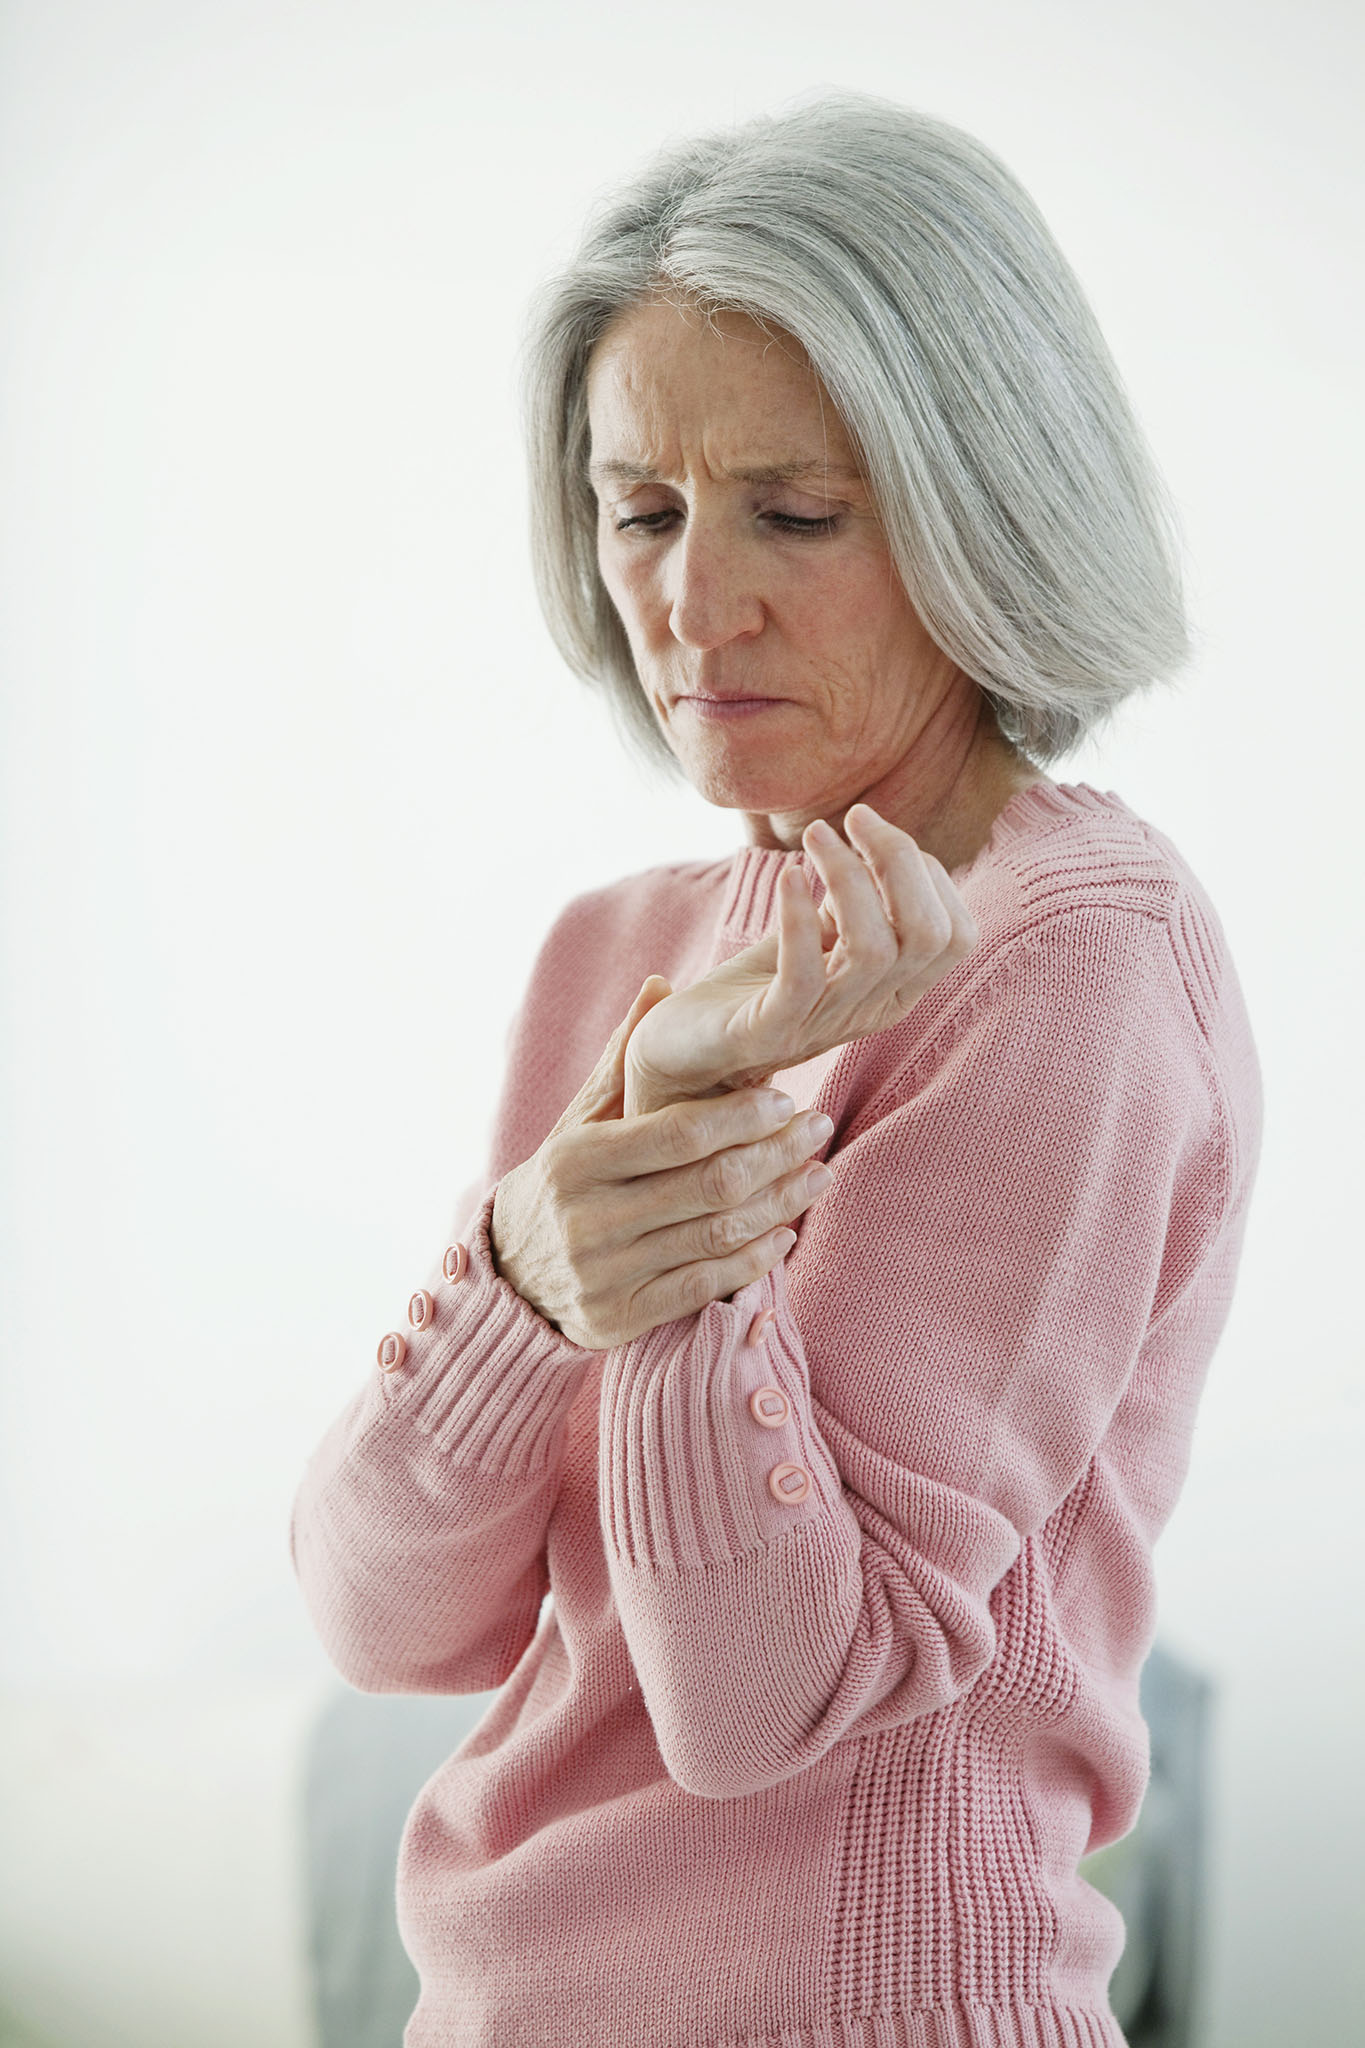 Elderly women examining her sore wrist